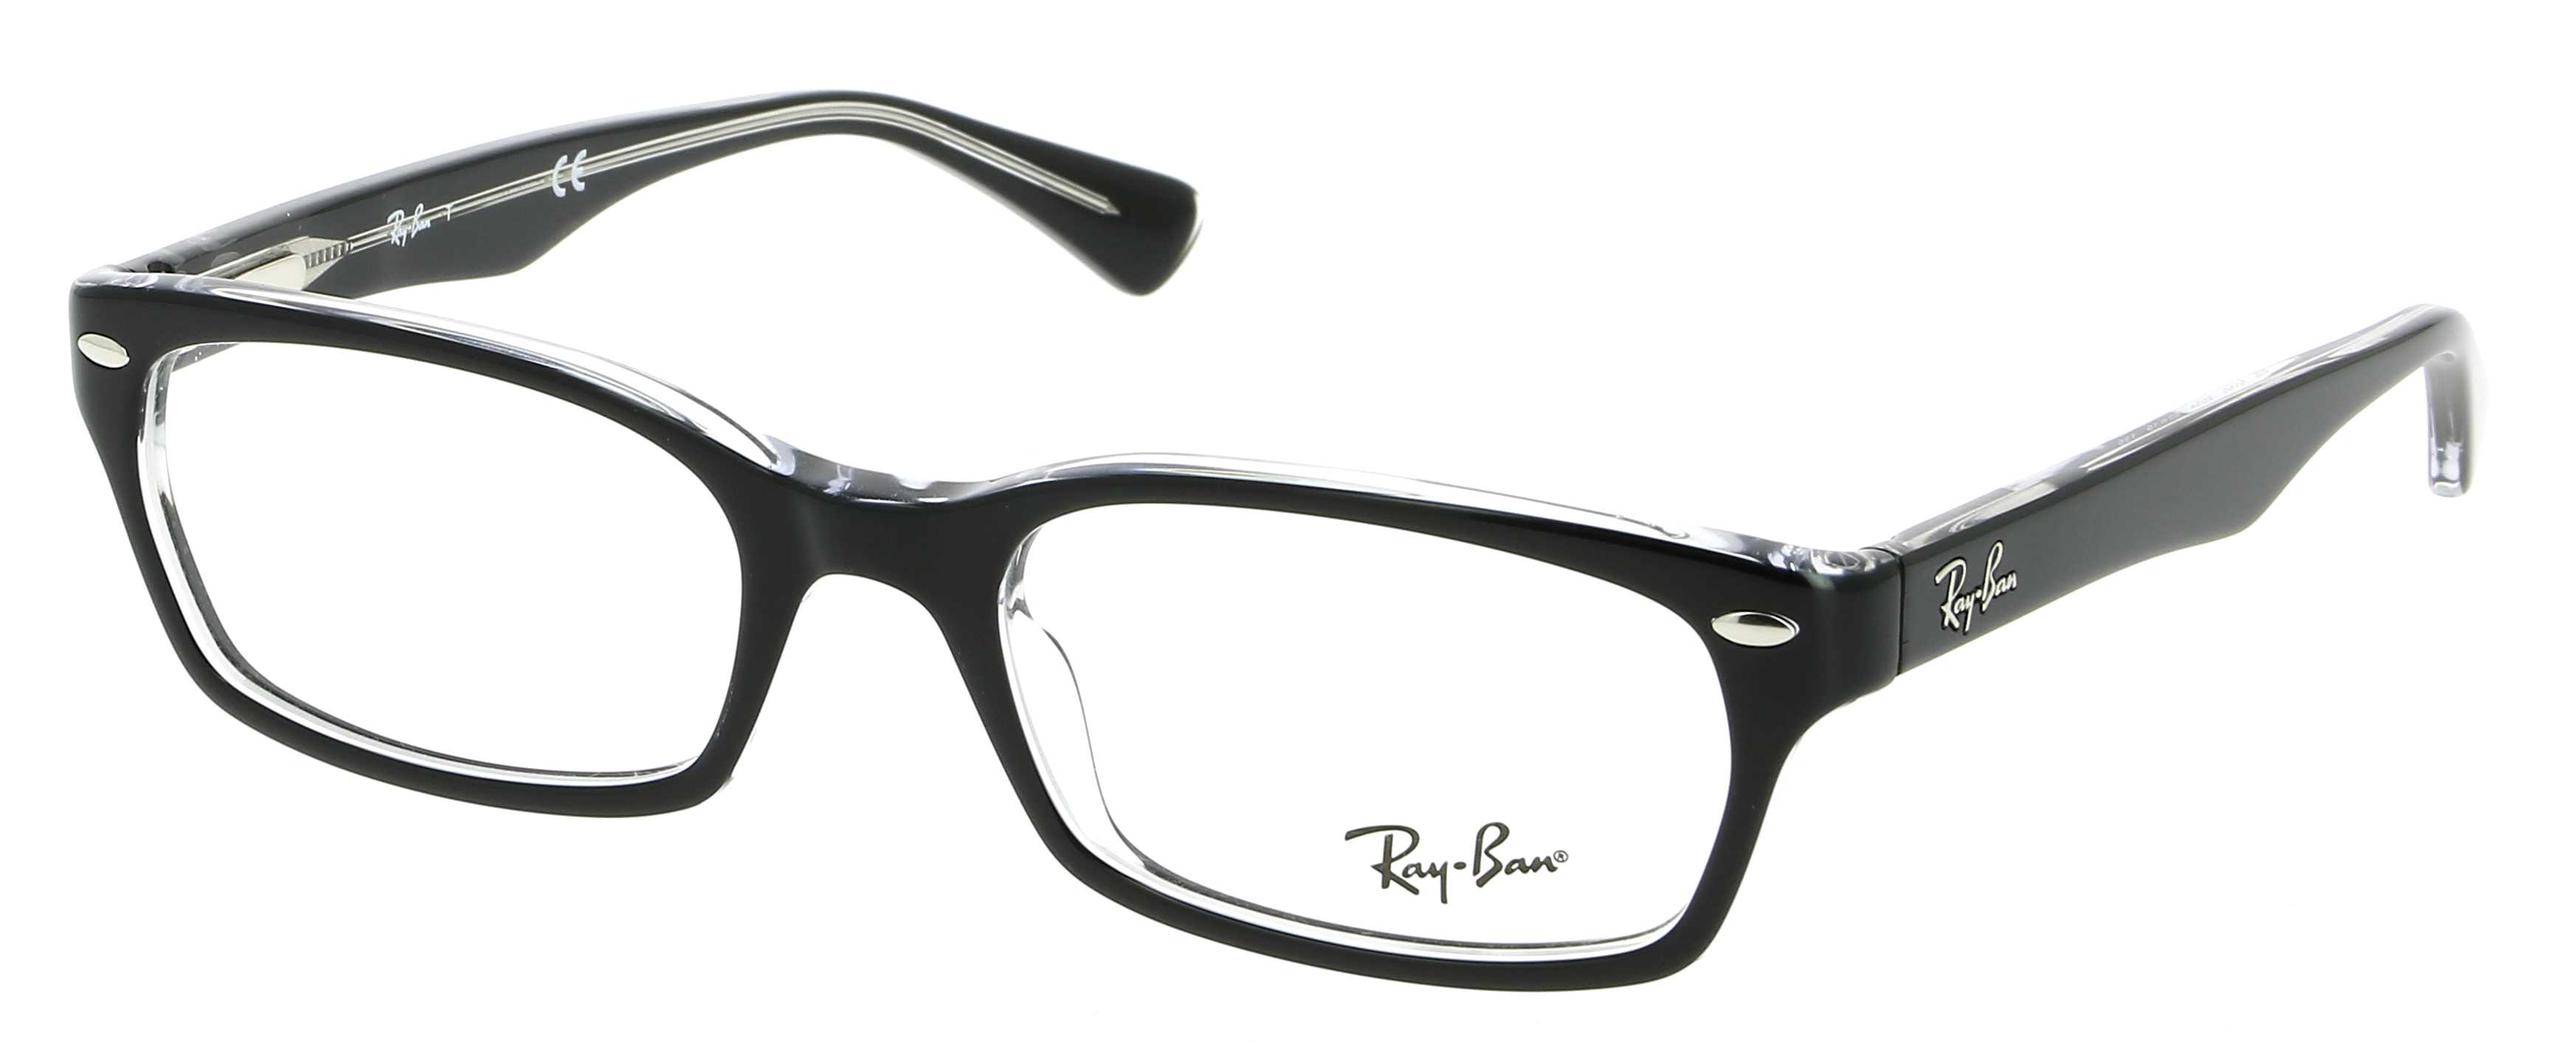 ray ban rx5150 eyeglasses